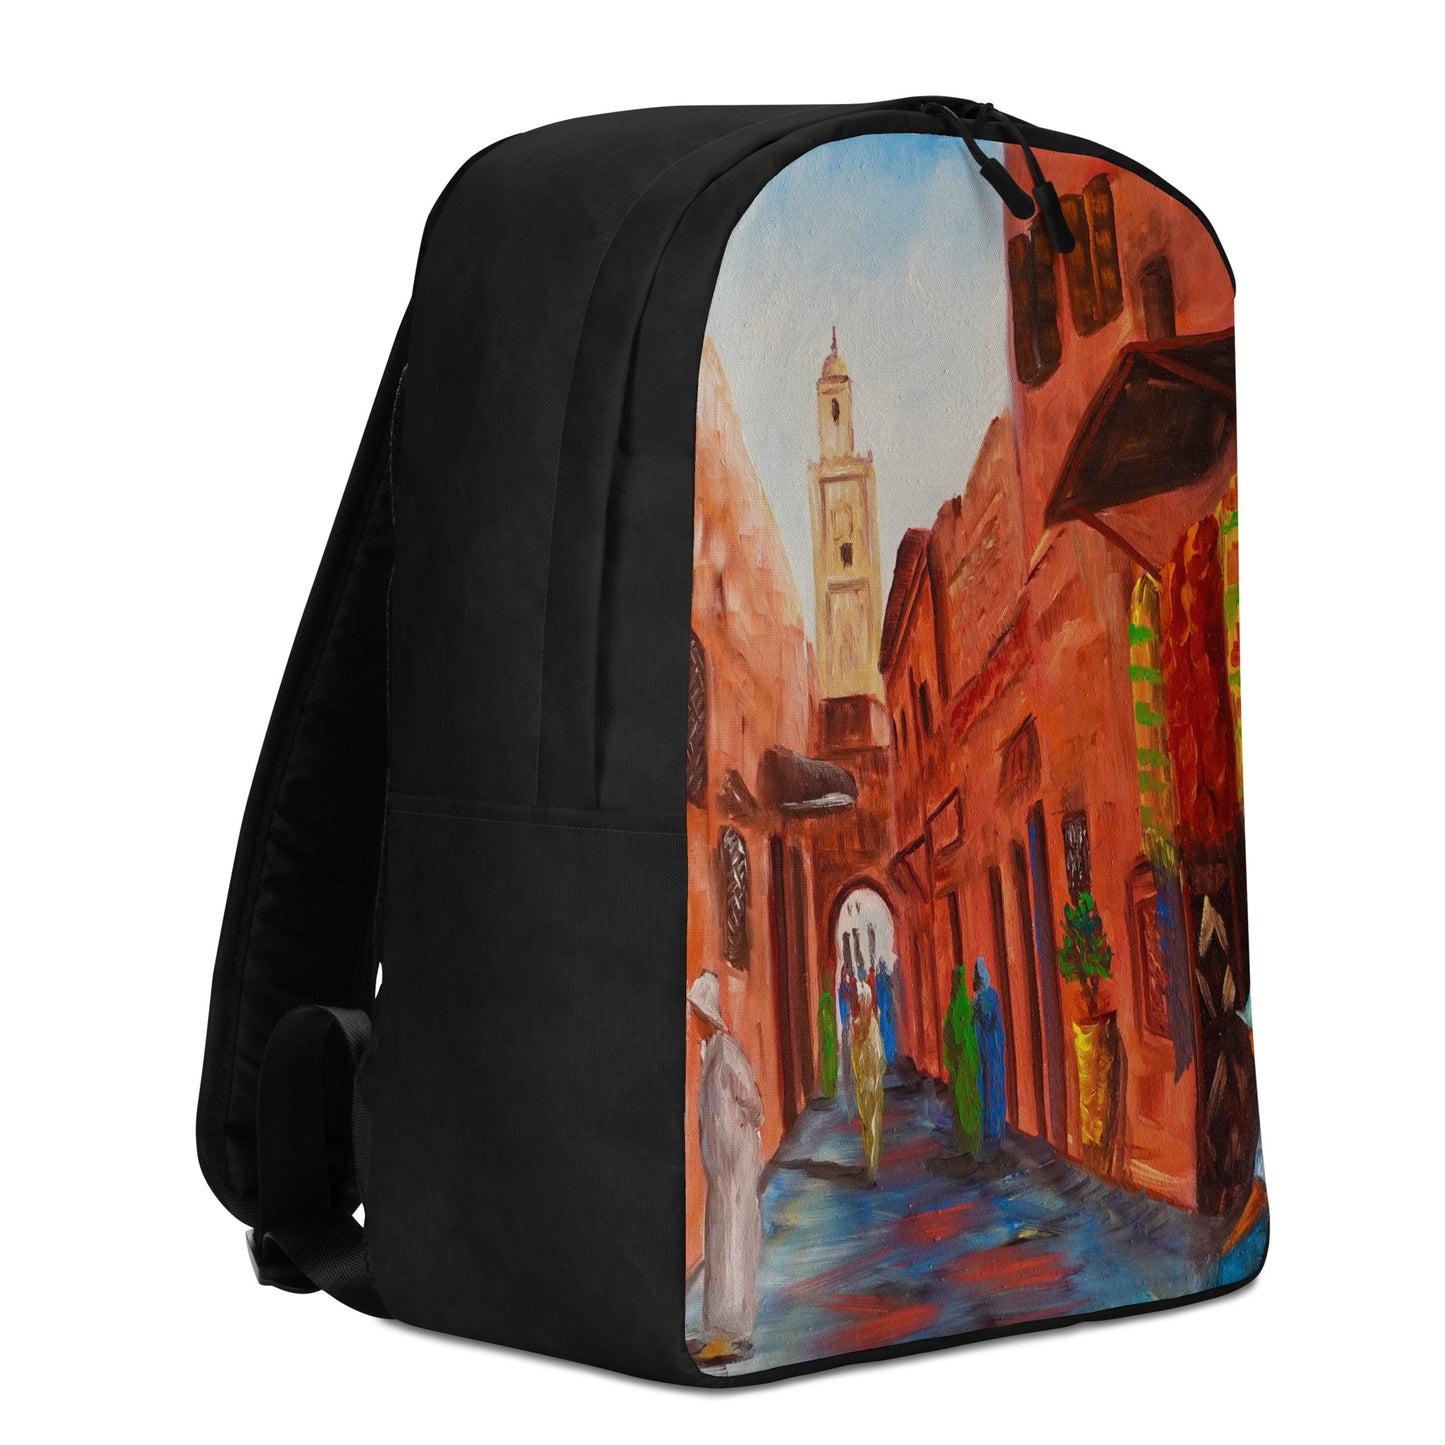 Backpack "Marrakech" Ideal for laptop Secret pocket Travel Art